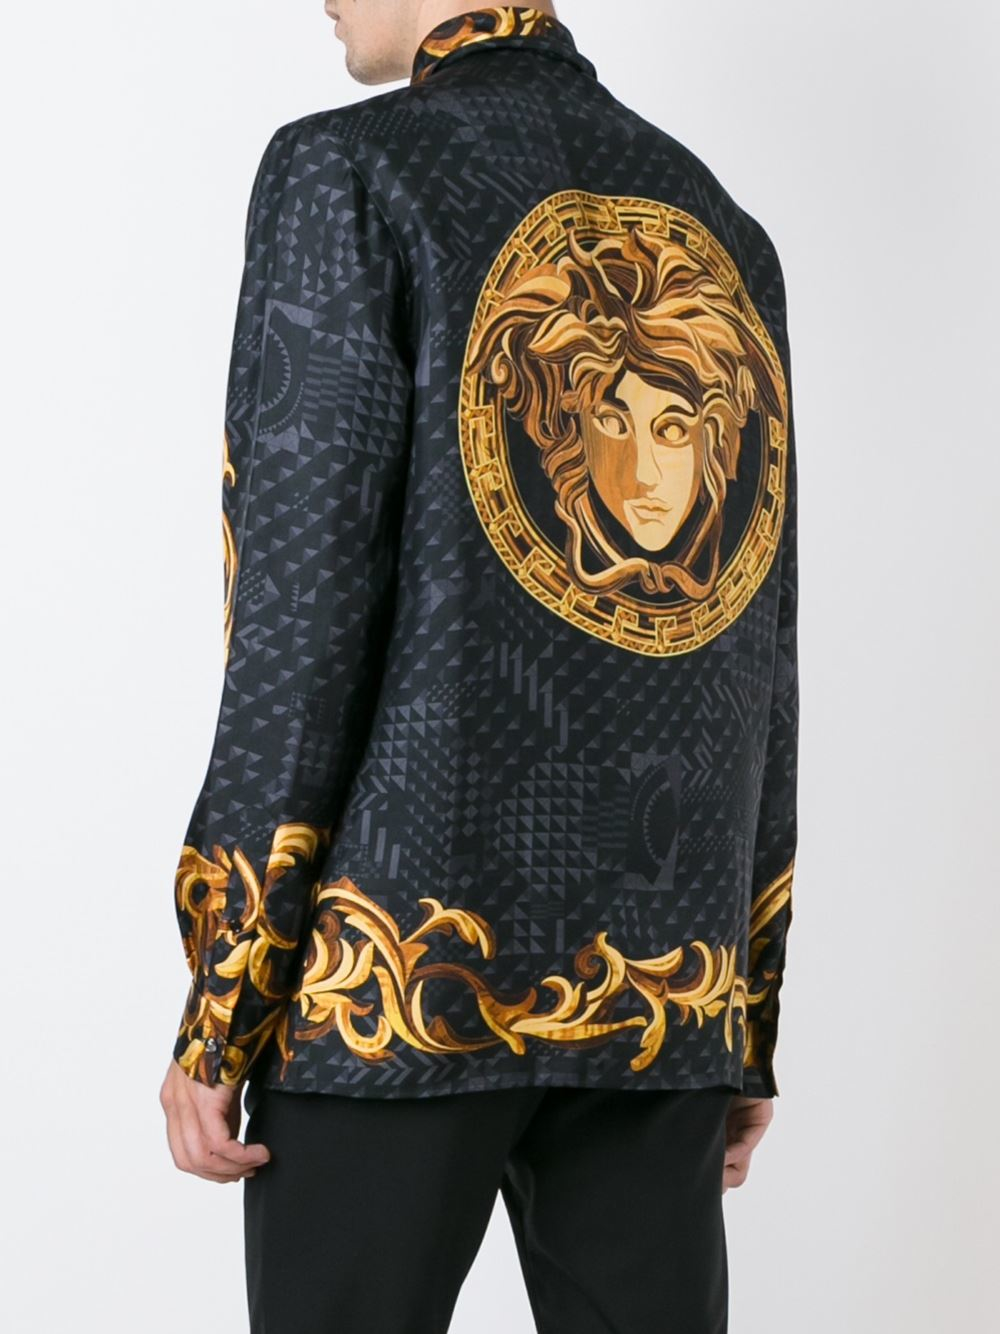 Versace Silk Baroque Print Shirt in Black for Men - Lyst